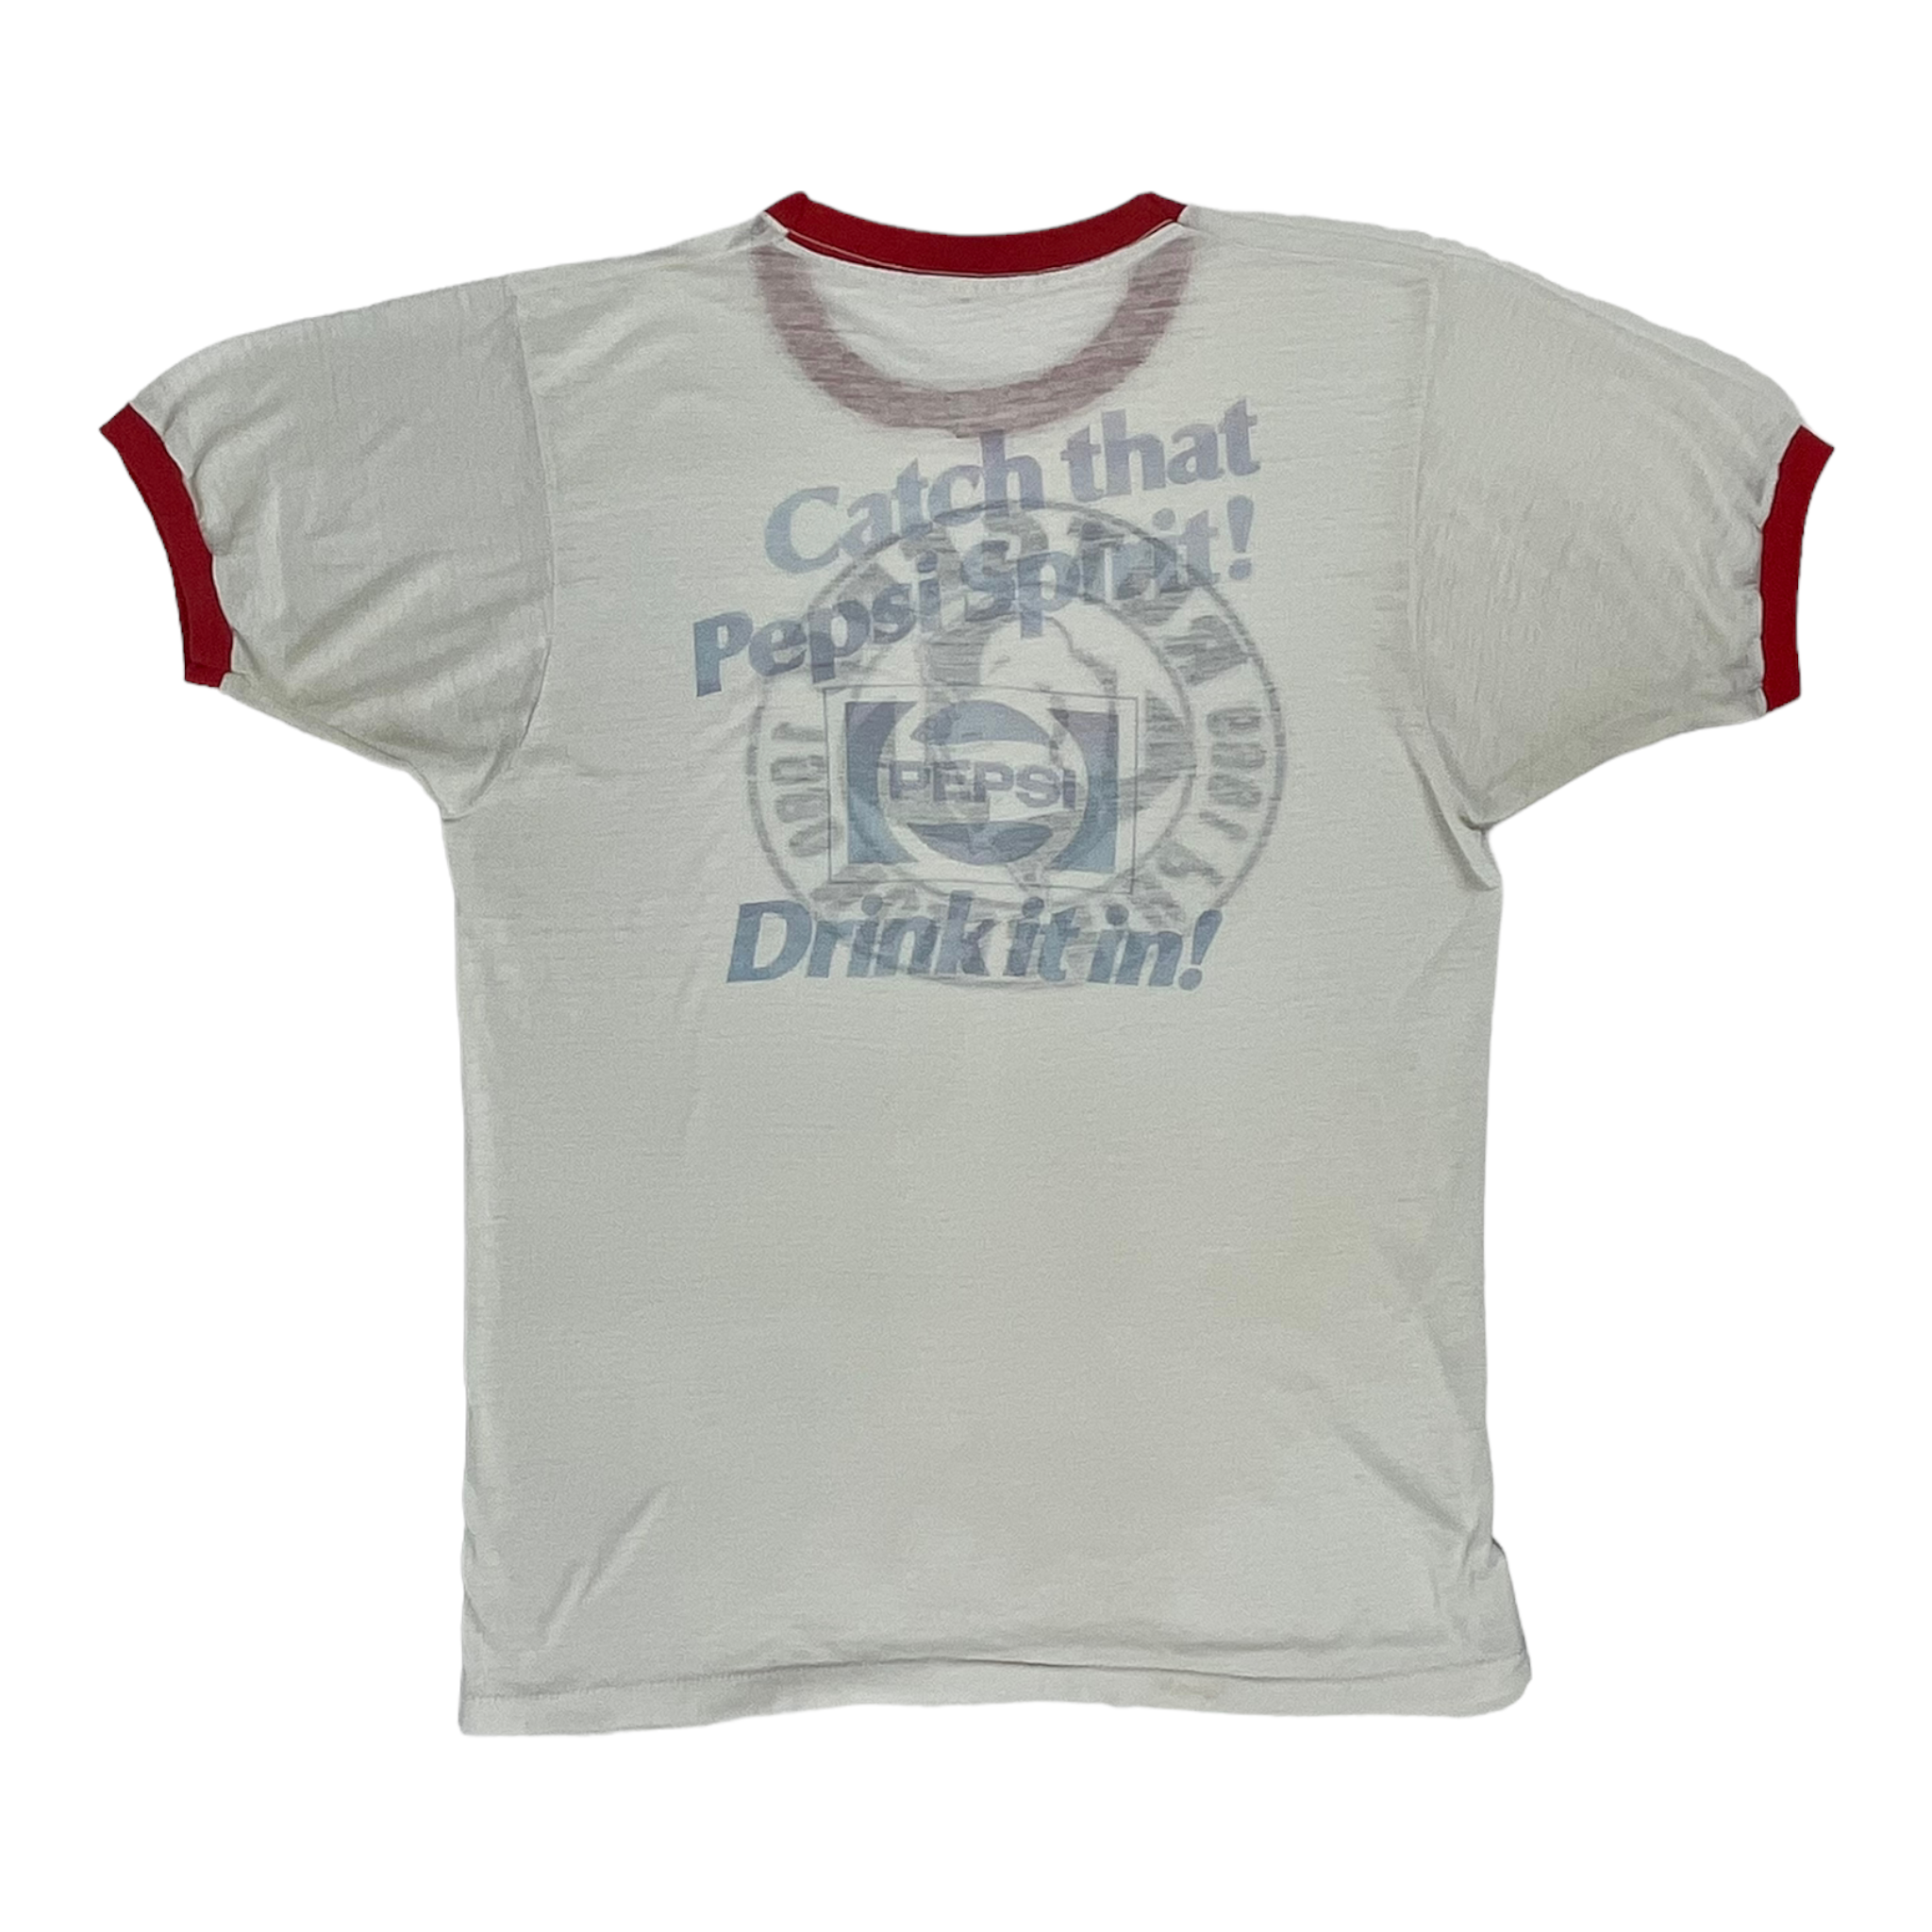 Vintage 1980s Princeton vs. Rutgers T-shirt - Restorecph